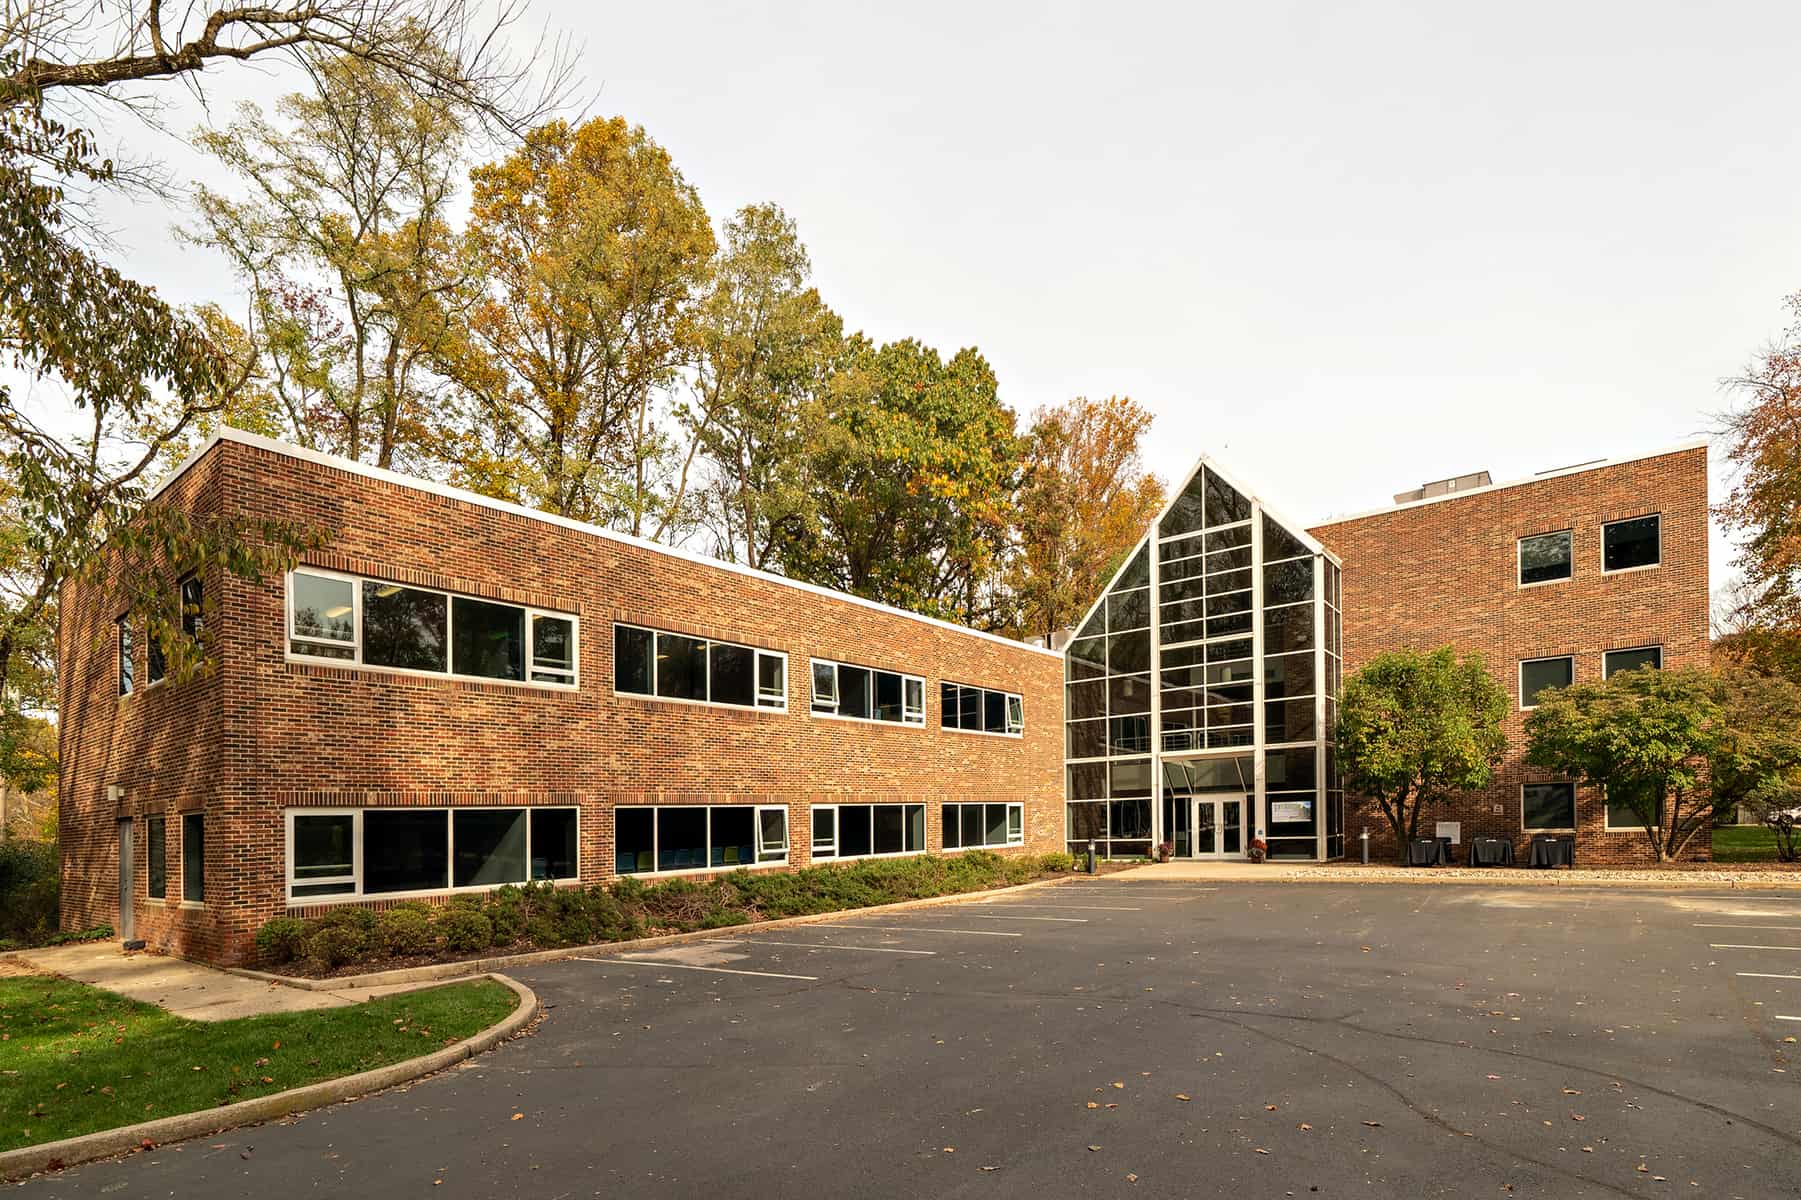 Photos: Princeton Senior Resource Center’s Nancy S. Klath Center for Lifelong Learning opens